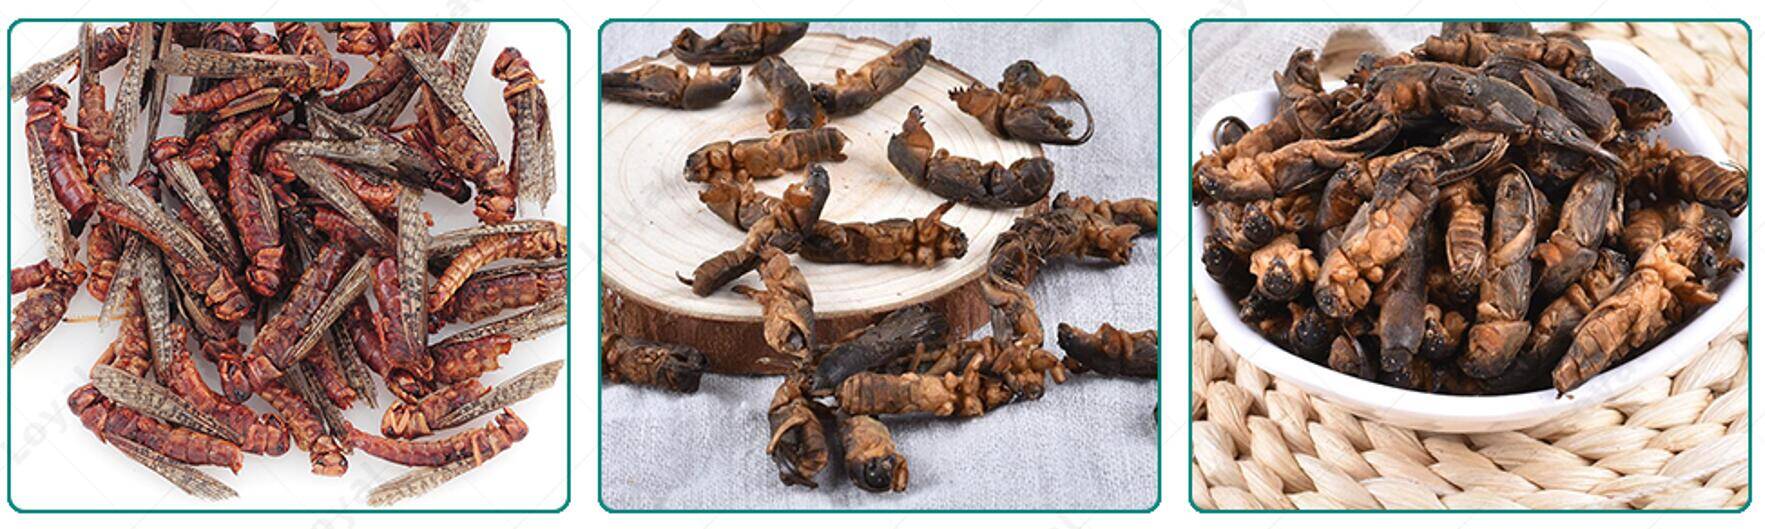 Microwave Grasshopper Locust Dehydration sample